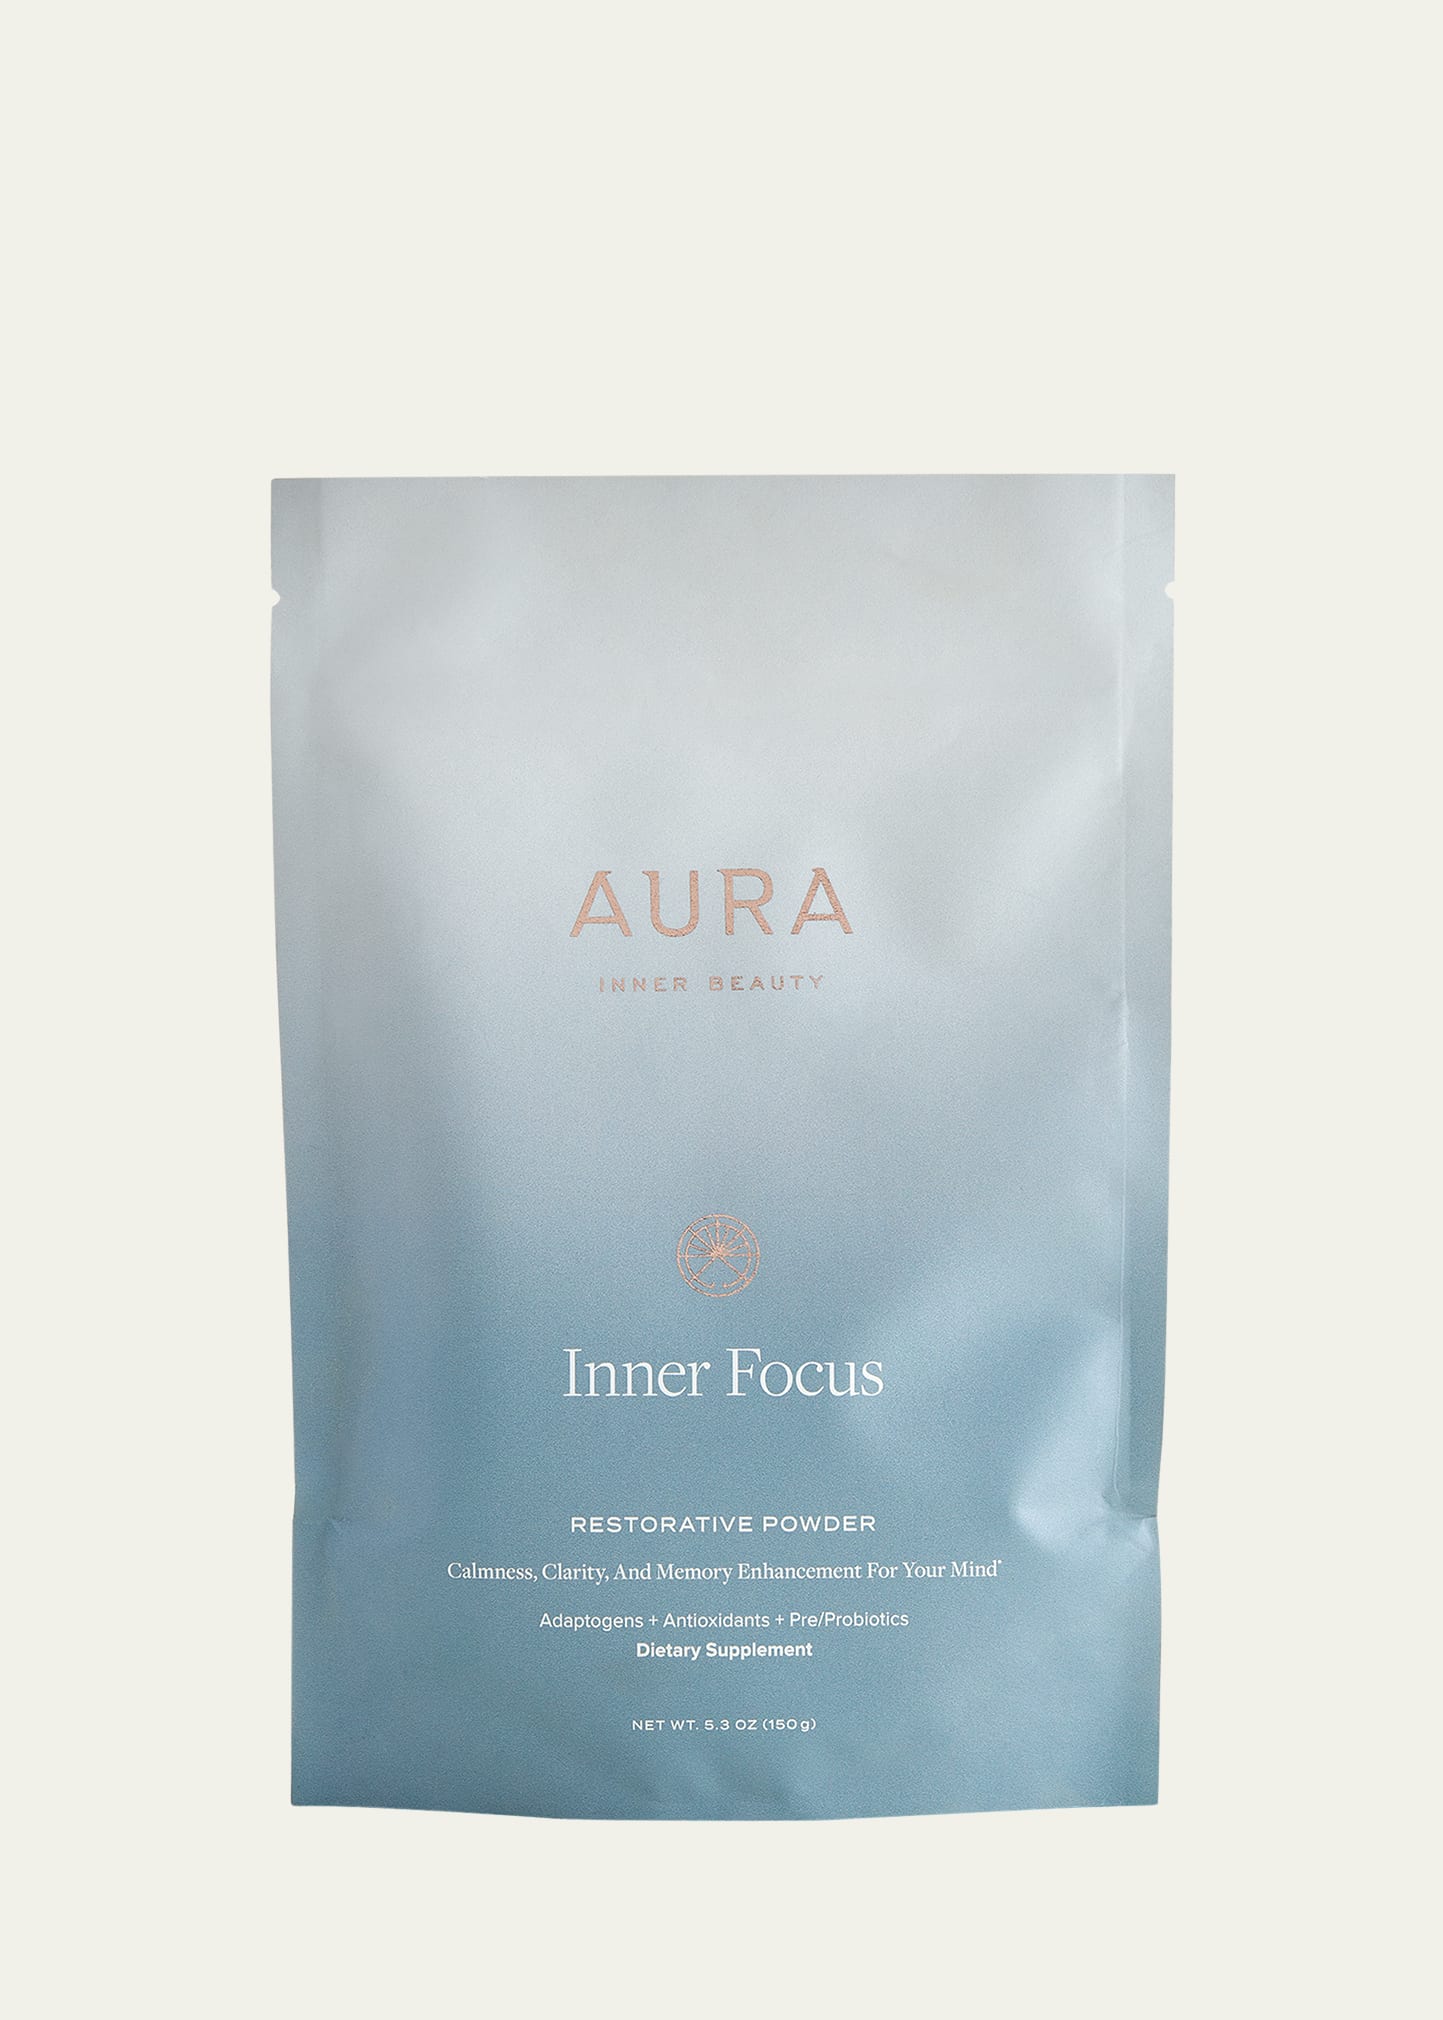 Aura Inner Beauty 5.3 oz. Inner Focus Restorative Powder